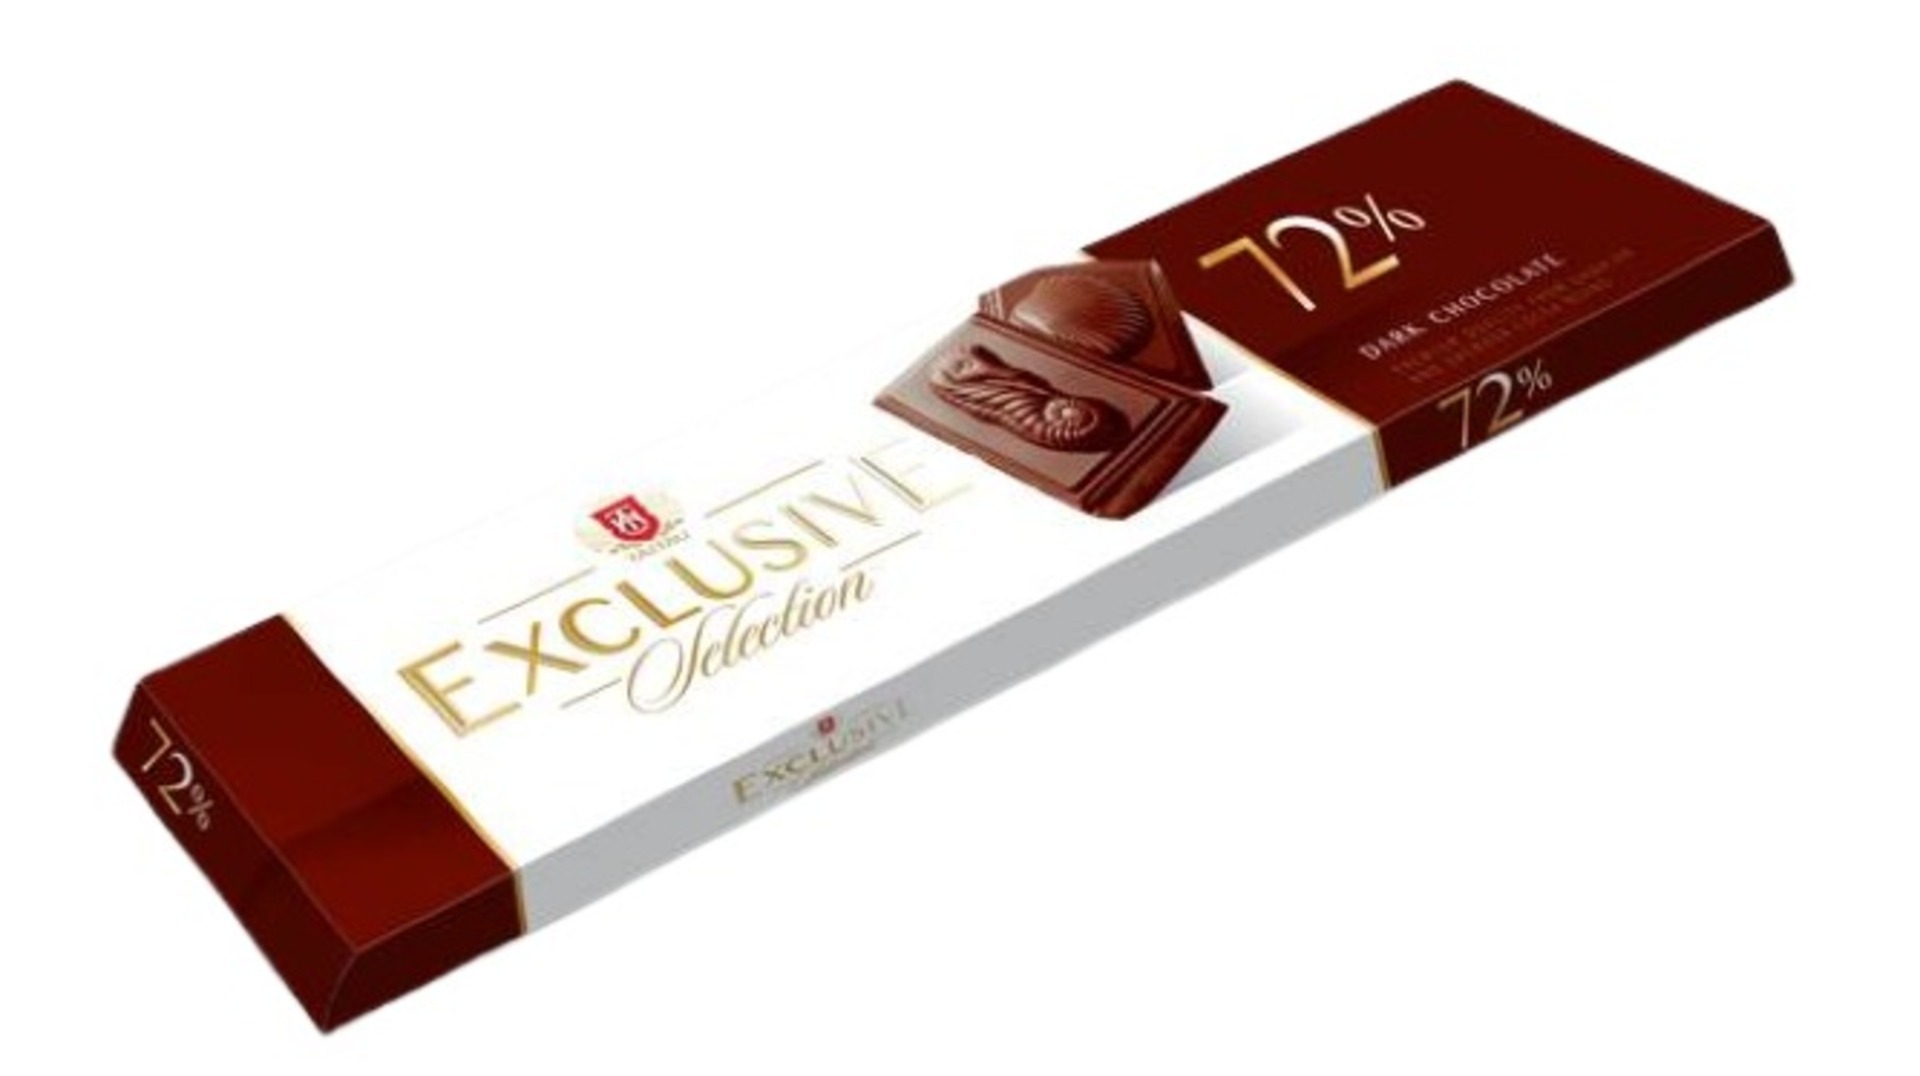 Taitau Exclusive Selection Hořká čokoláda 72% 50 g expirace